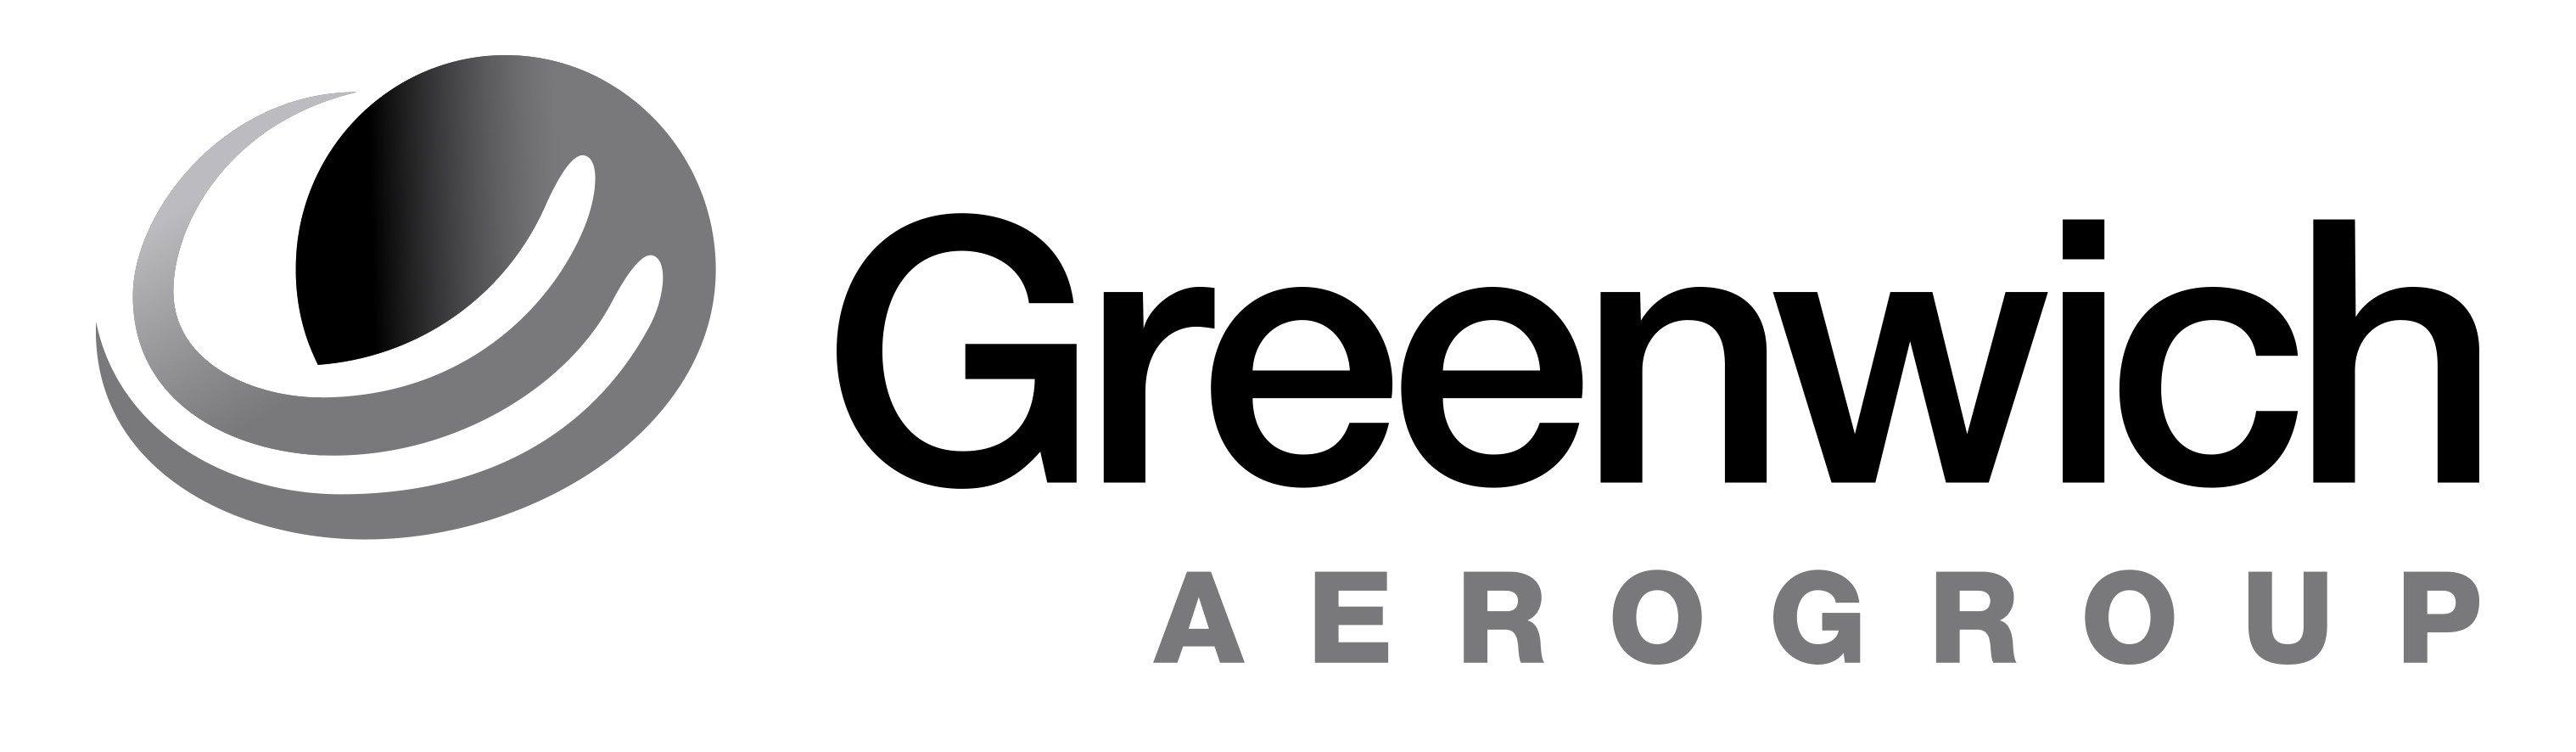 DynCorp Logo - greenwich aerogroup logo